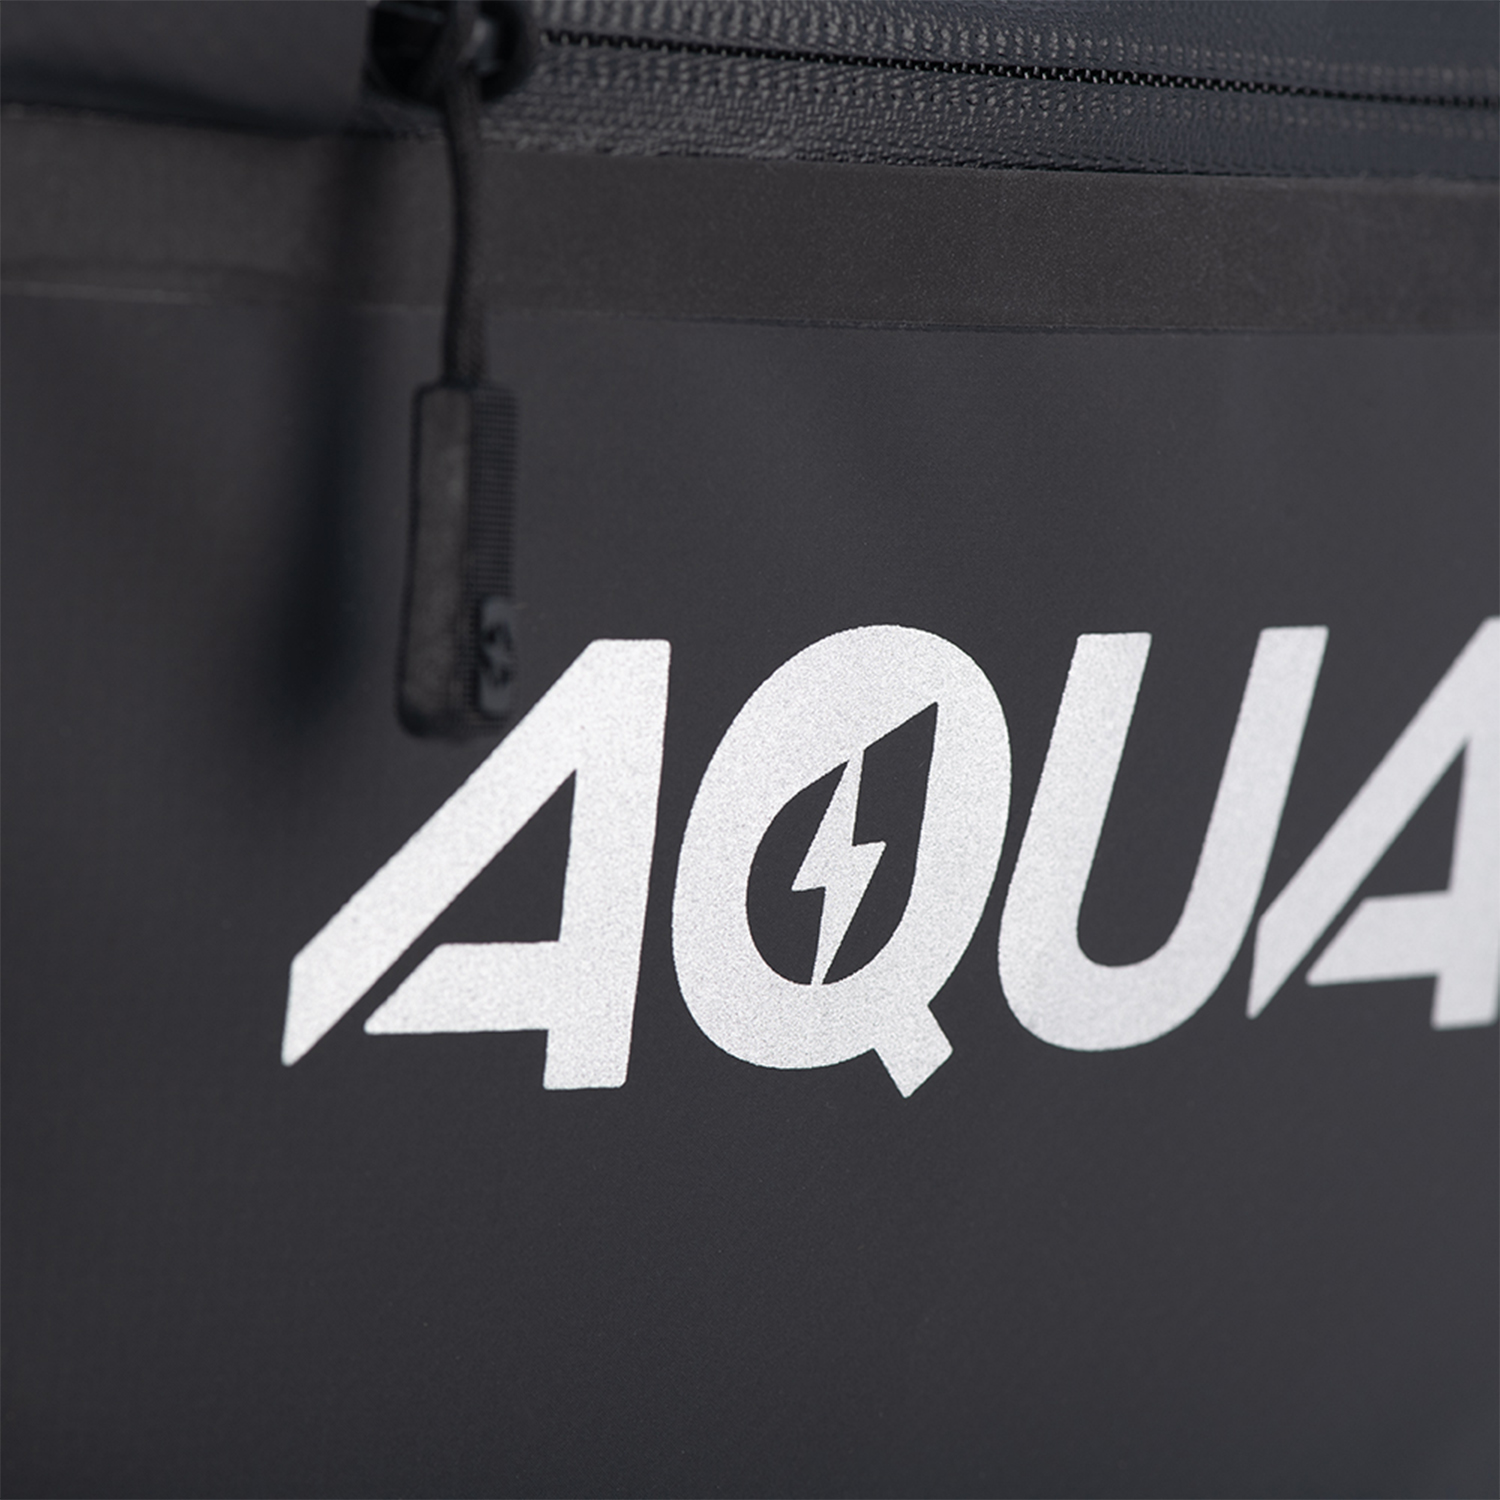 Велосумка Oxford Aqua V 32 Double Pannier Bag Black